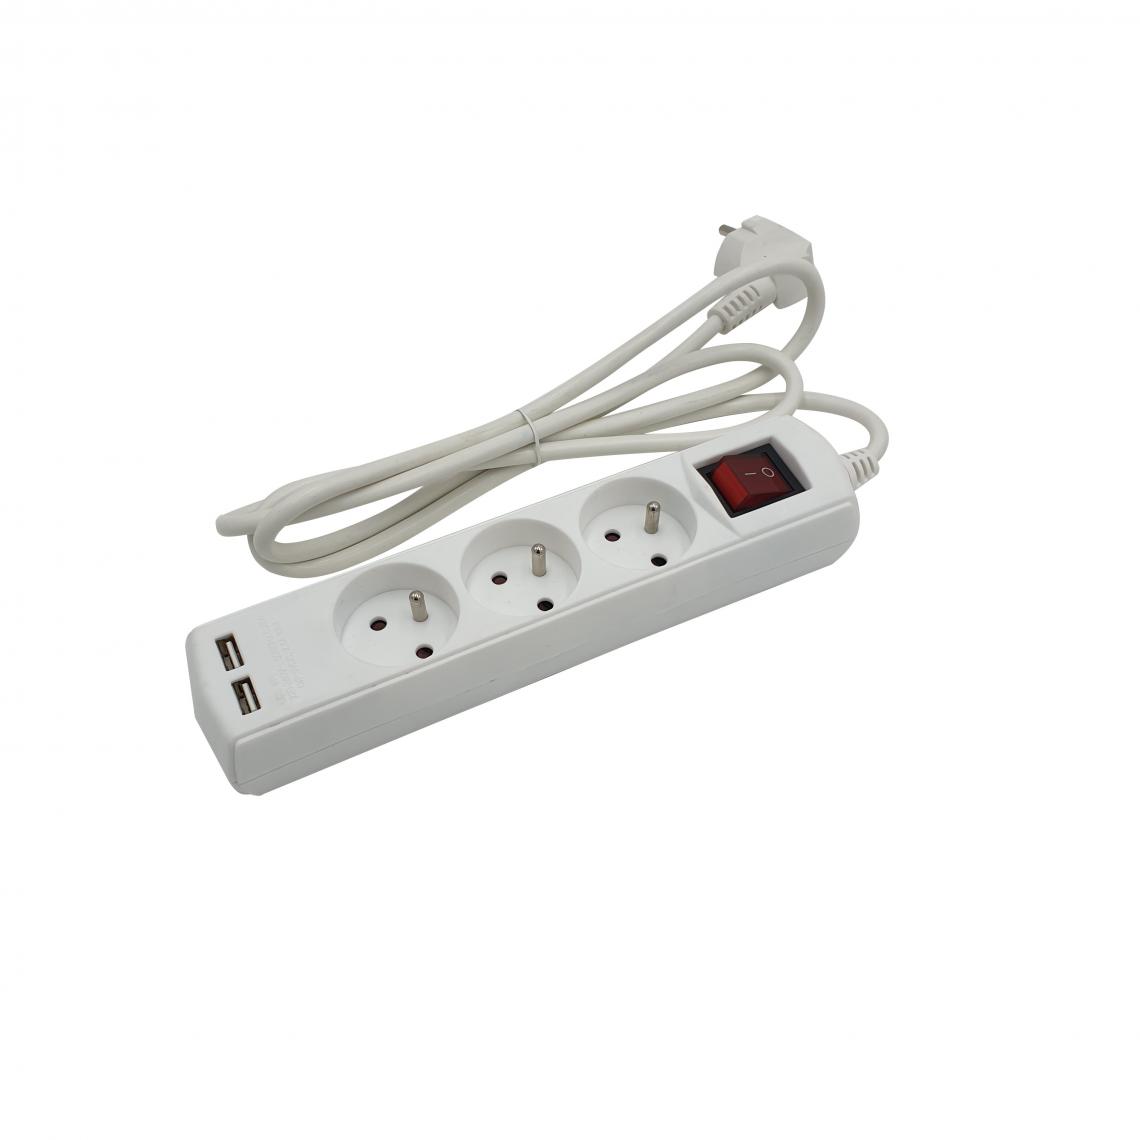 Velamp - Multiprise 3 sorties + 2 USB. Cable 1,5m - Blocs multiprises